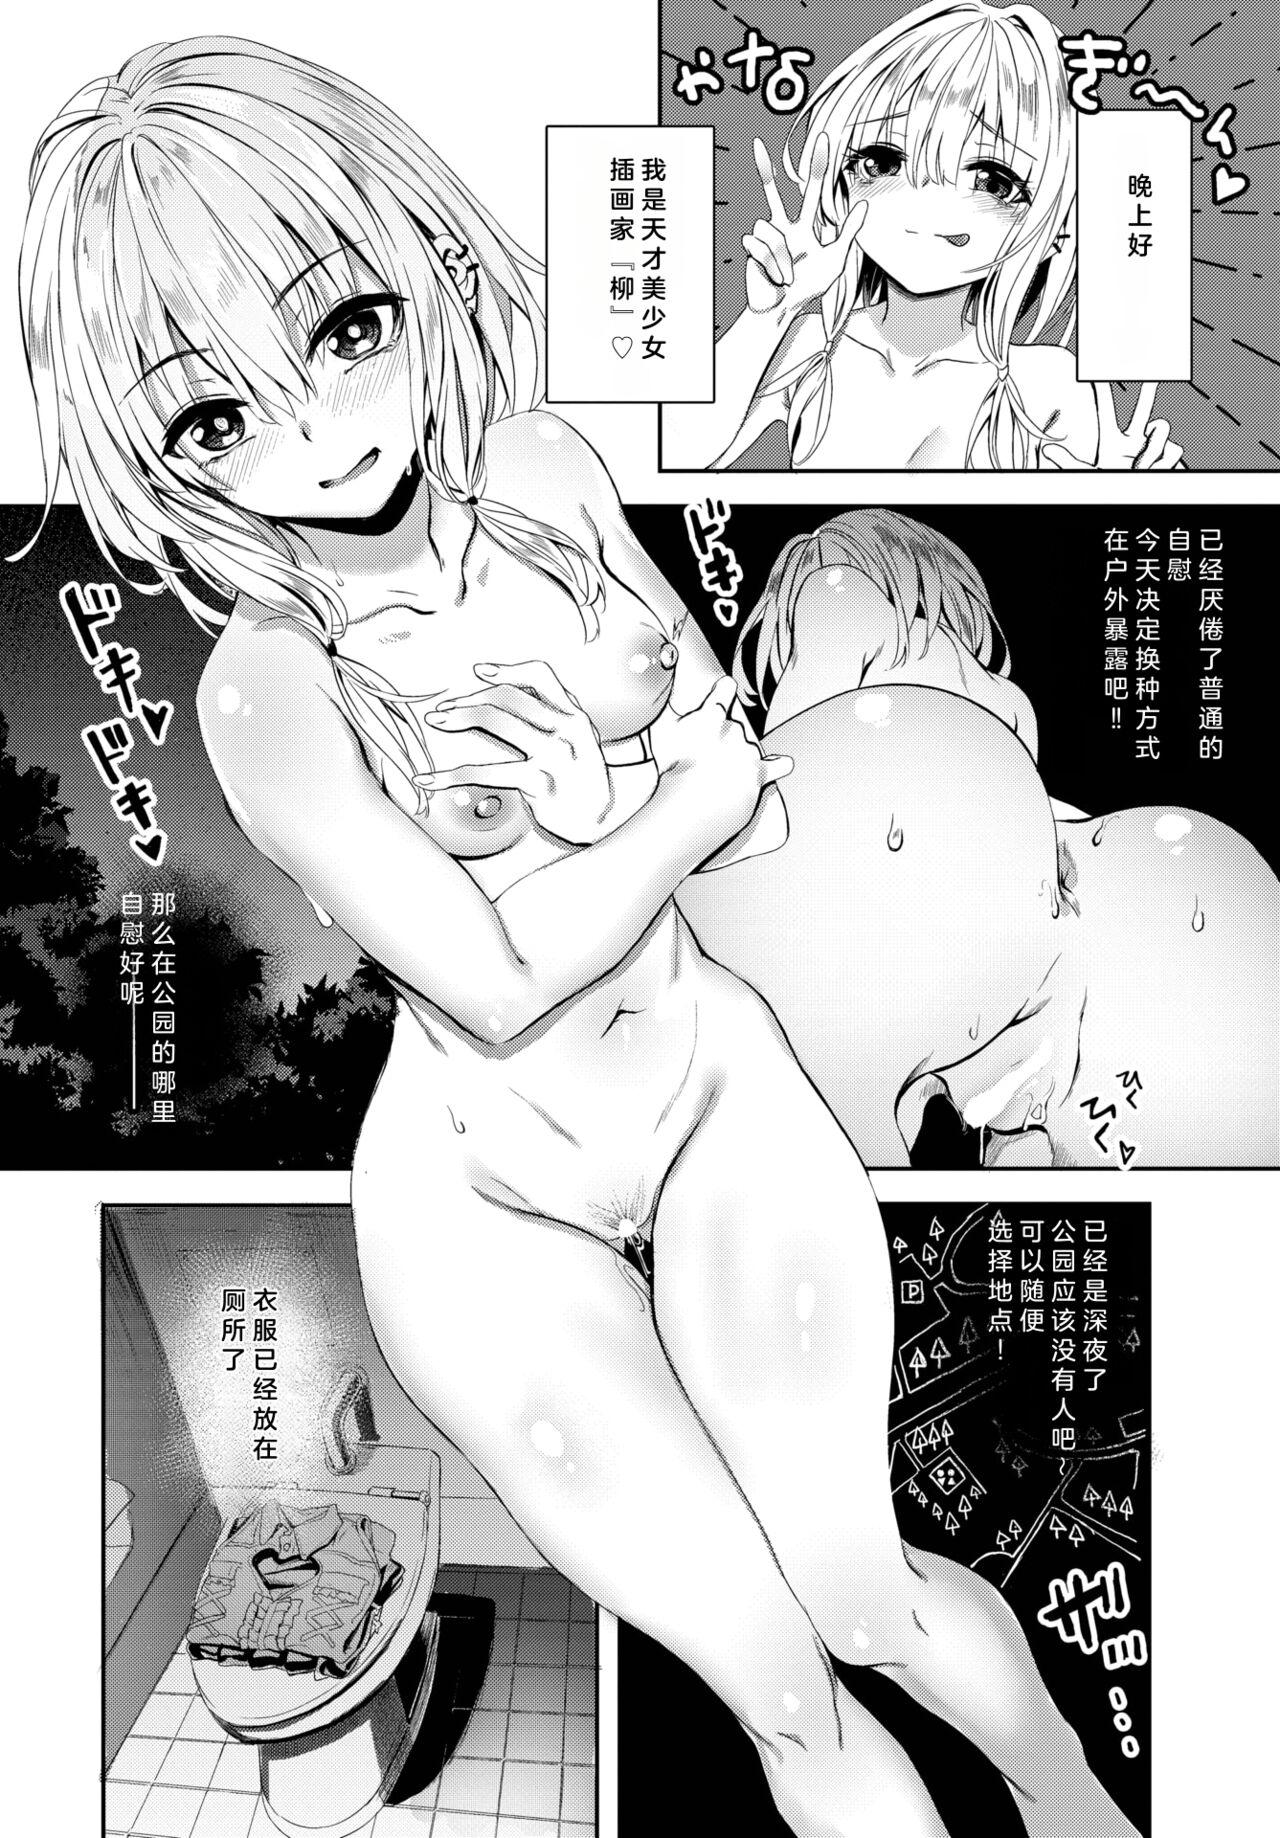 Office Jishou Kamieshi Yanagi no Enkou Ochinpo Report Manga Sono 1-3 Hairy Sexy - Page 6